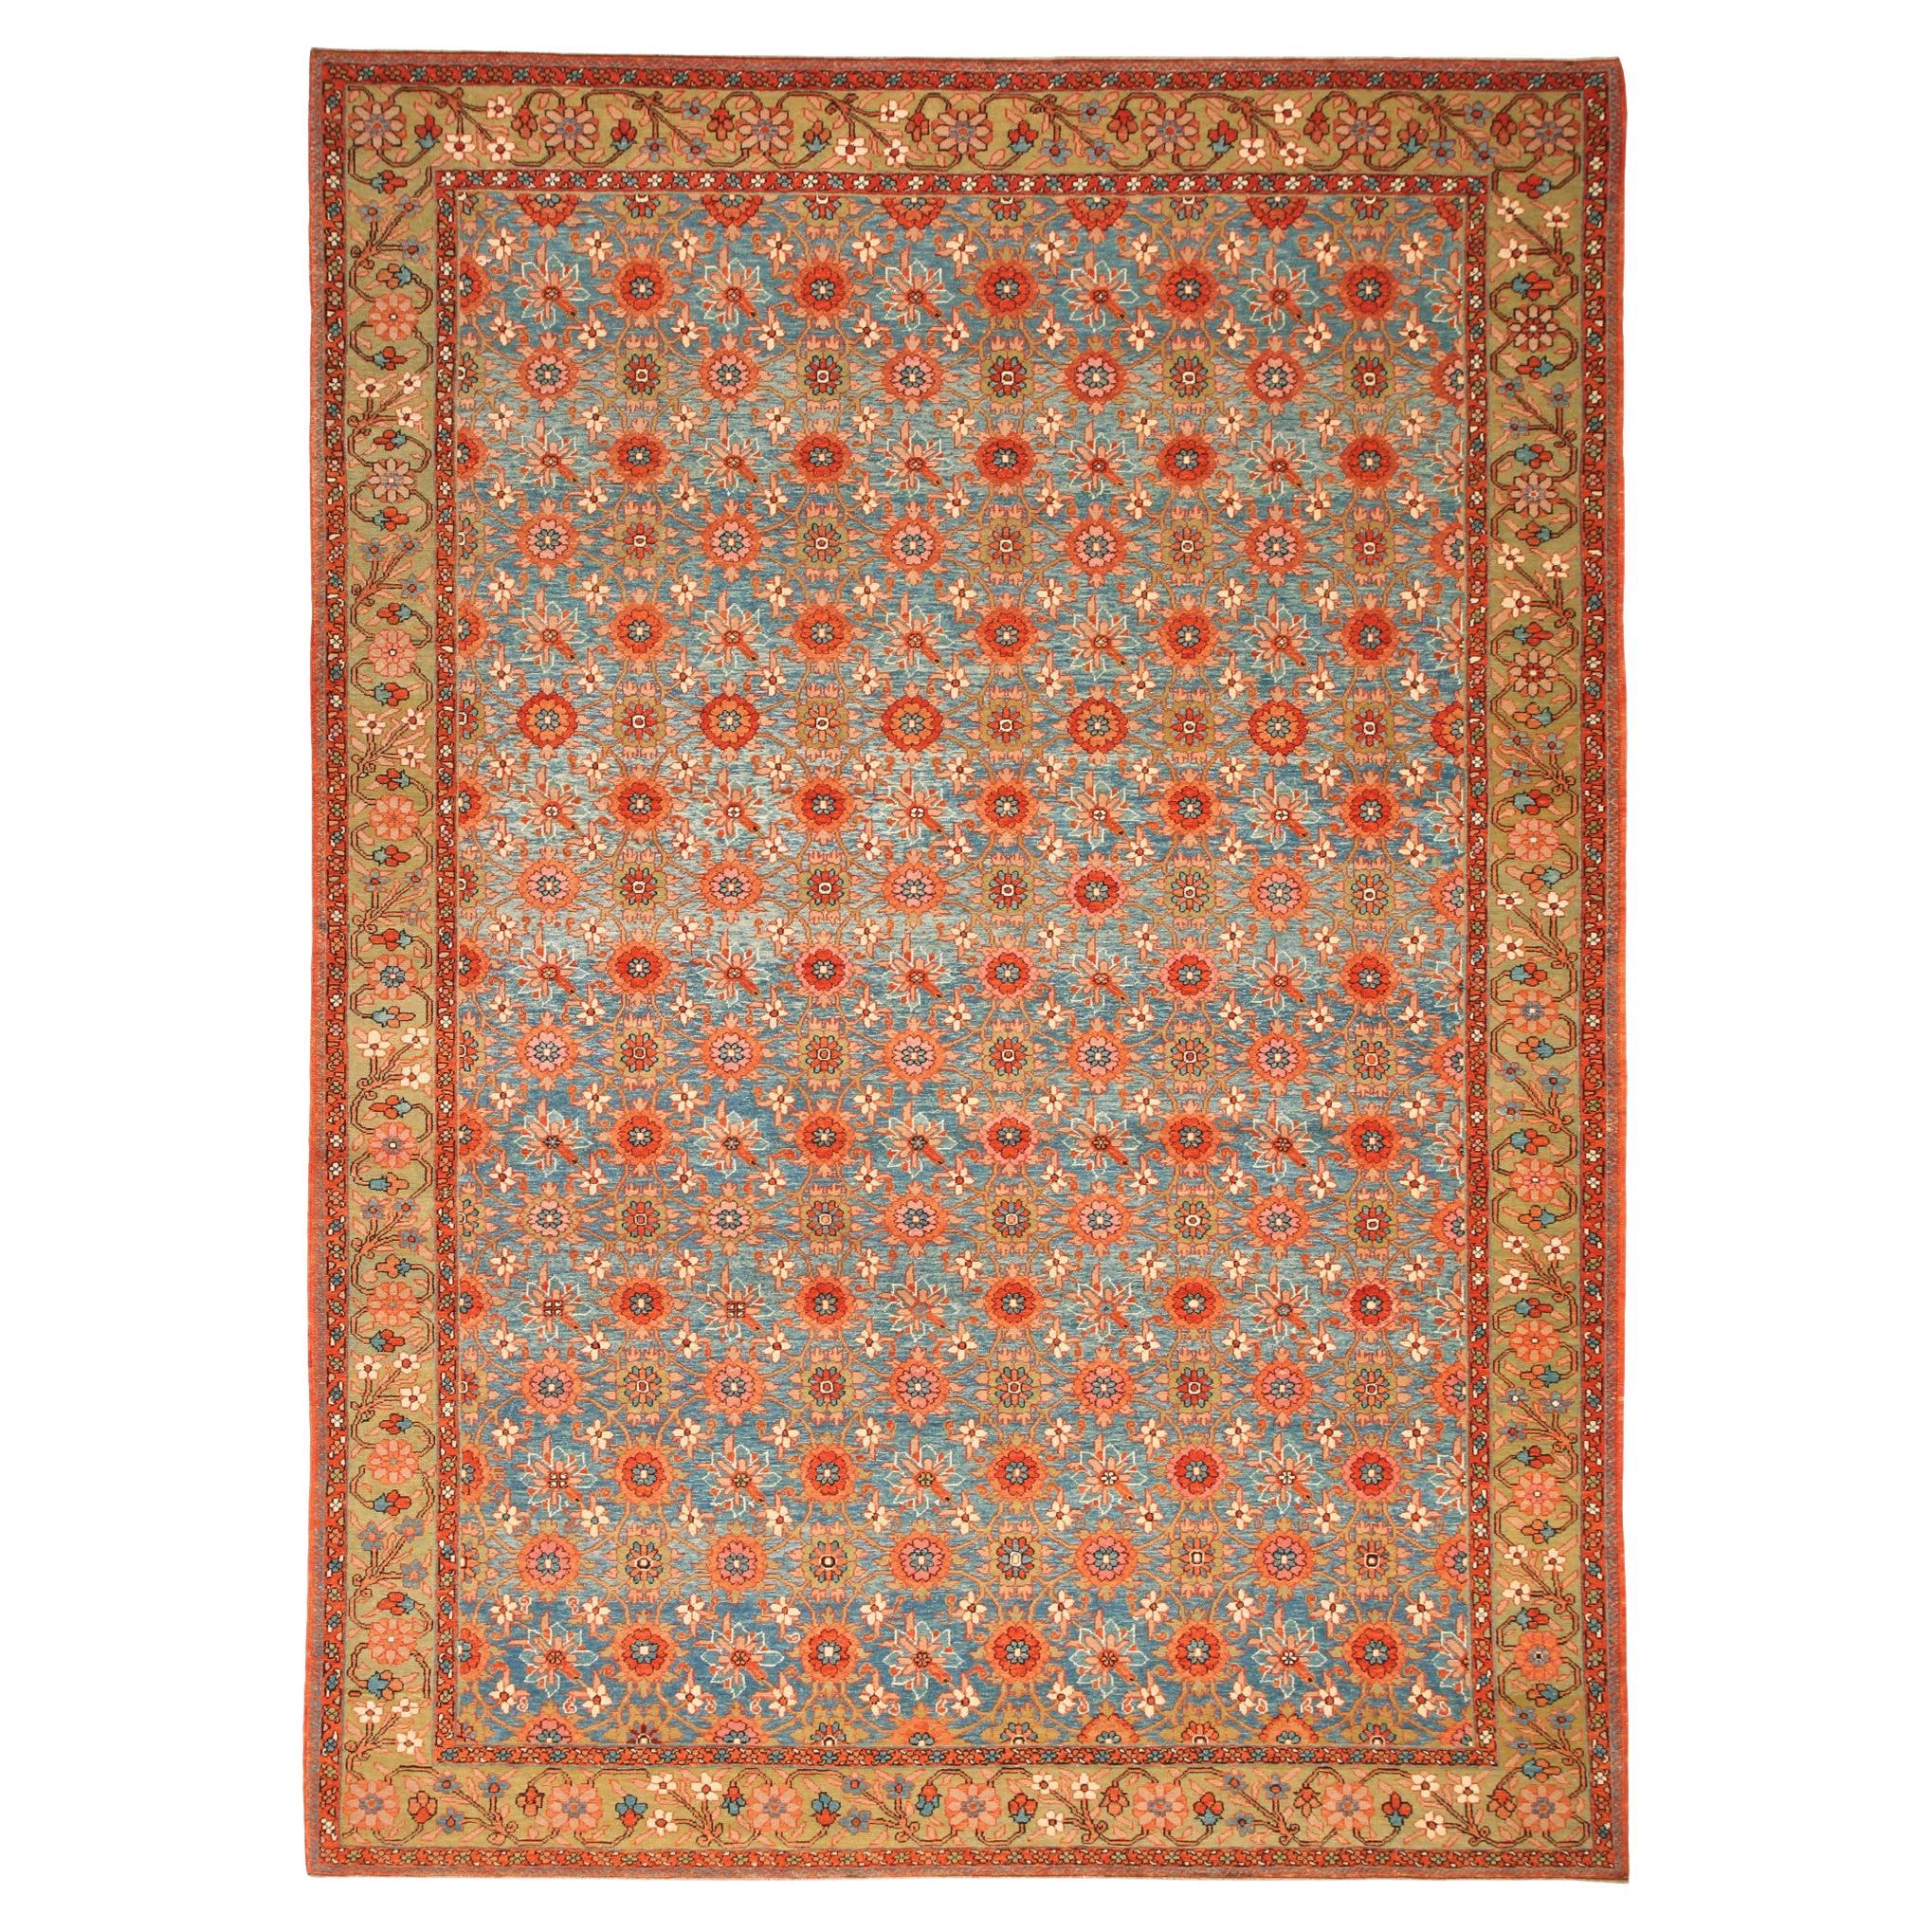 Ararat Rugs Mina Khani Rug, 19th Century Persian Revival Carpet, Natural Dyed